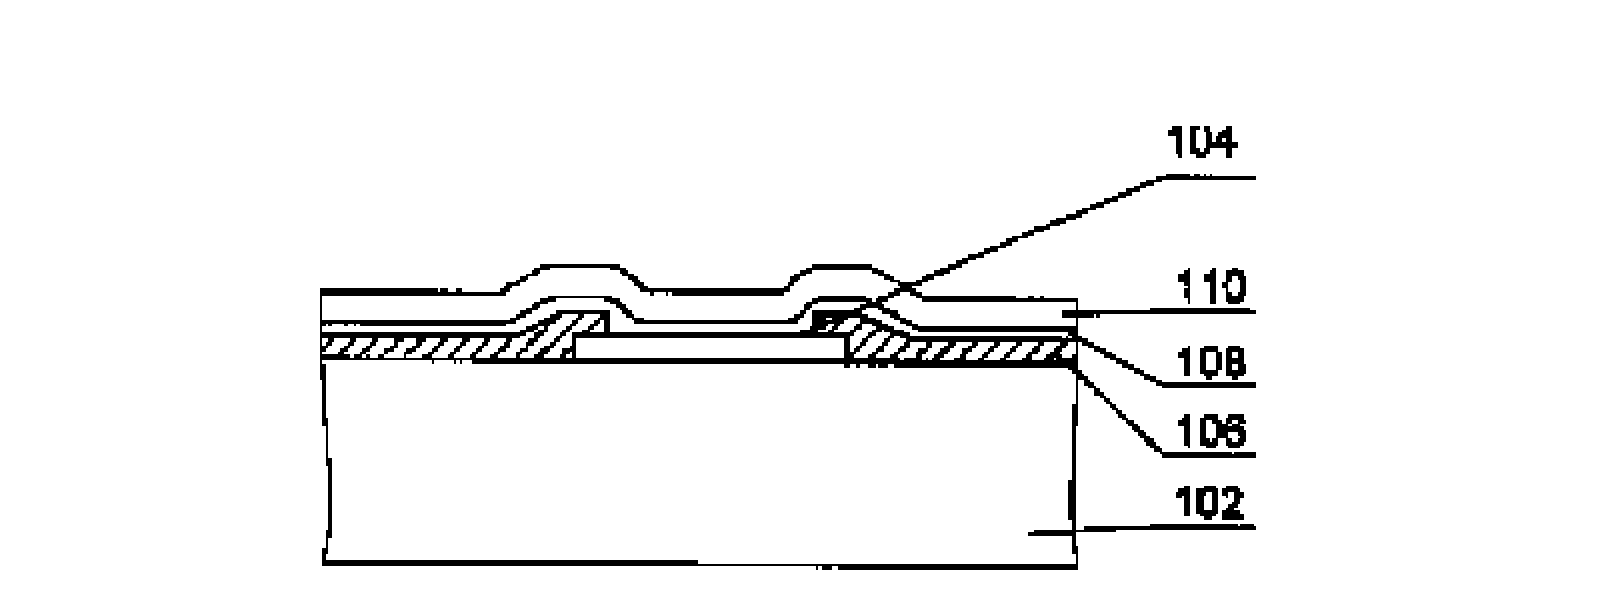 Method for forming solder bump